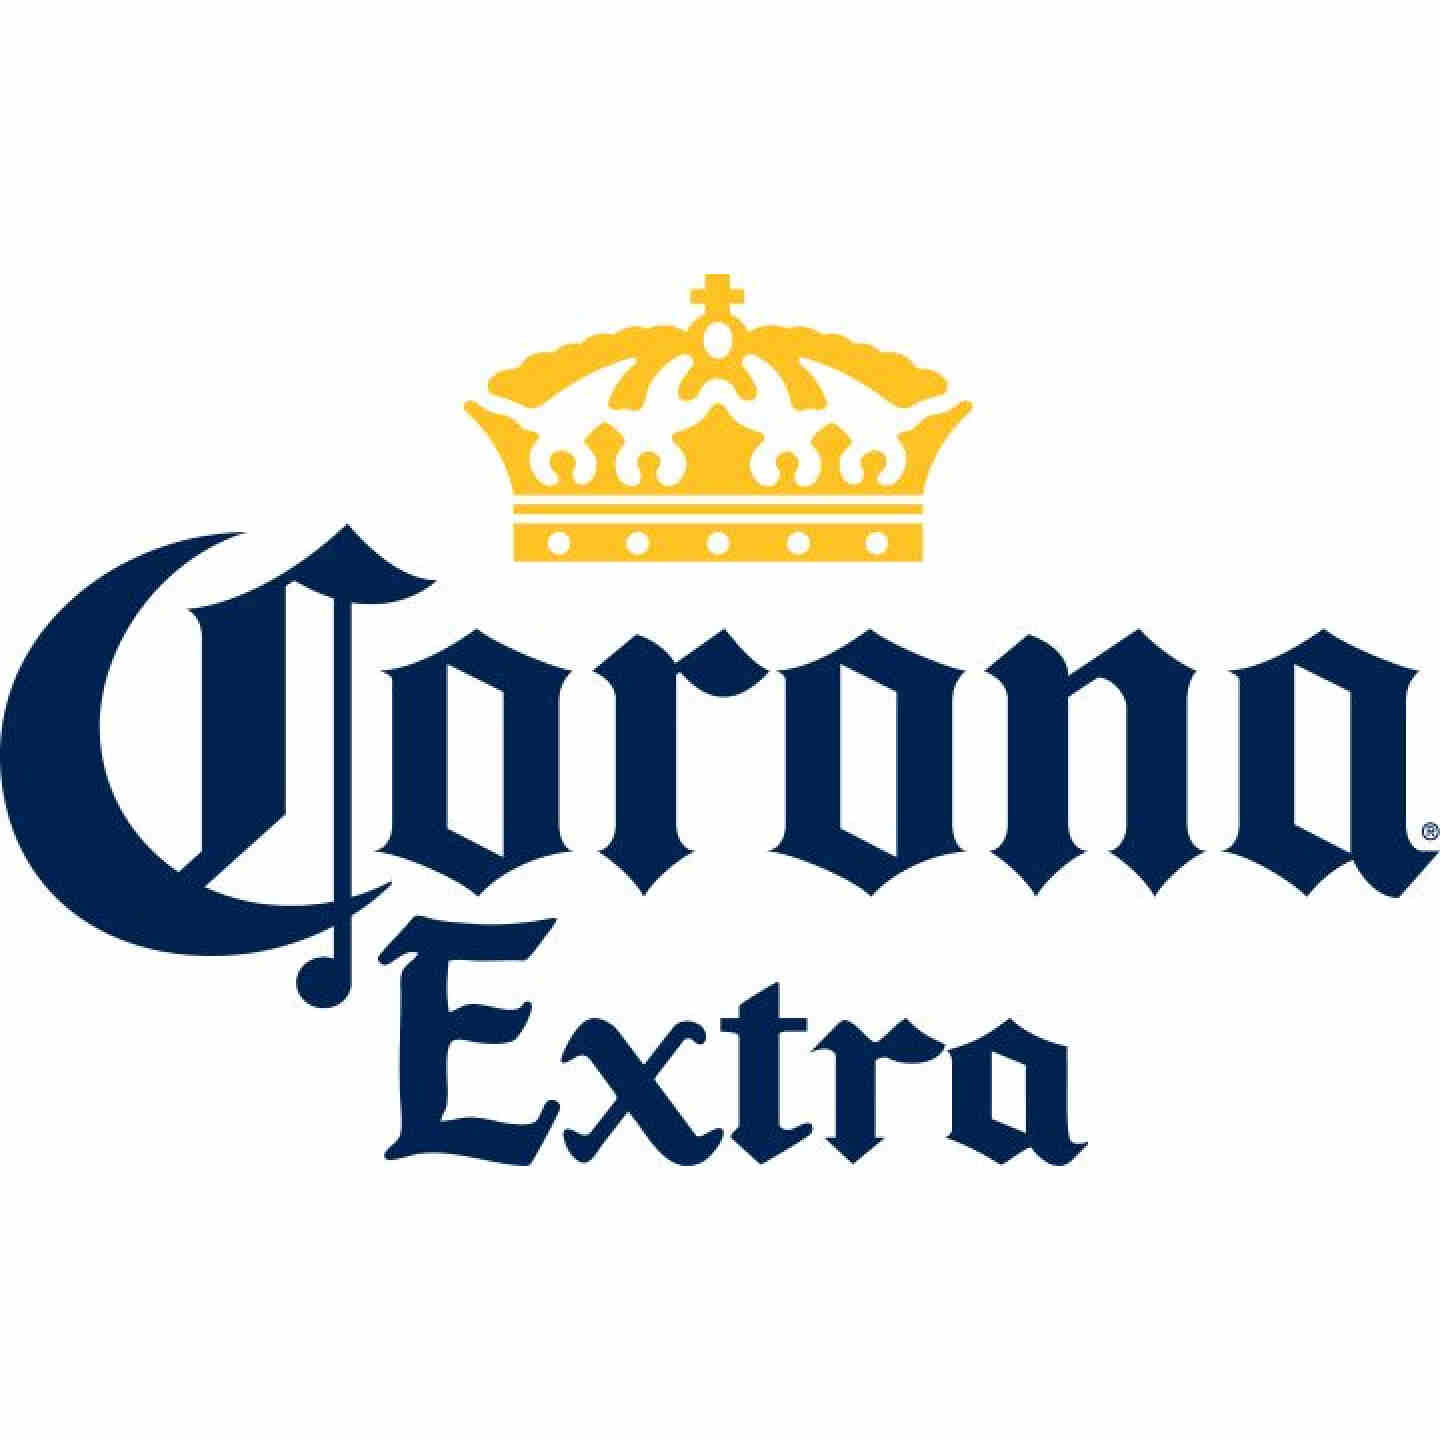 Corona Extra Image 1